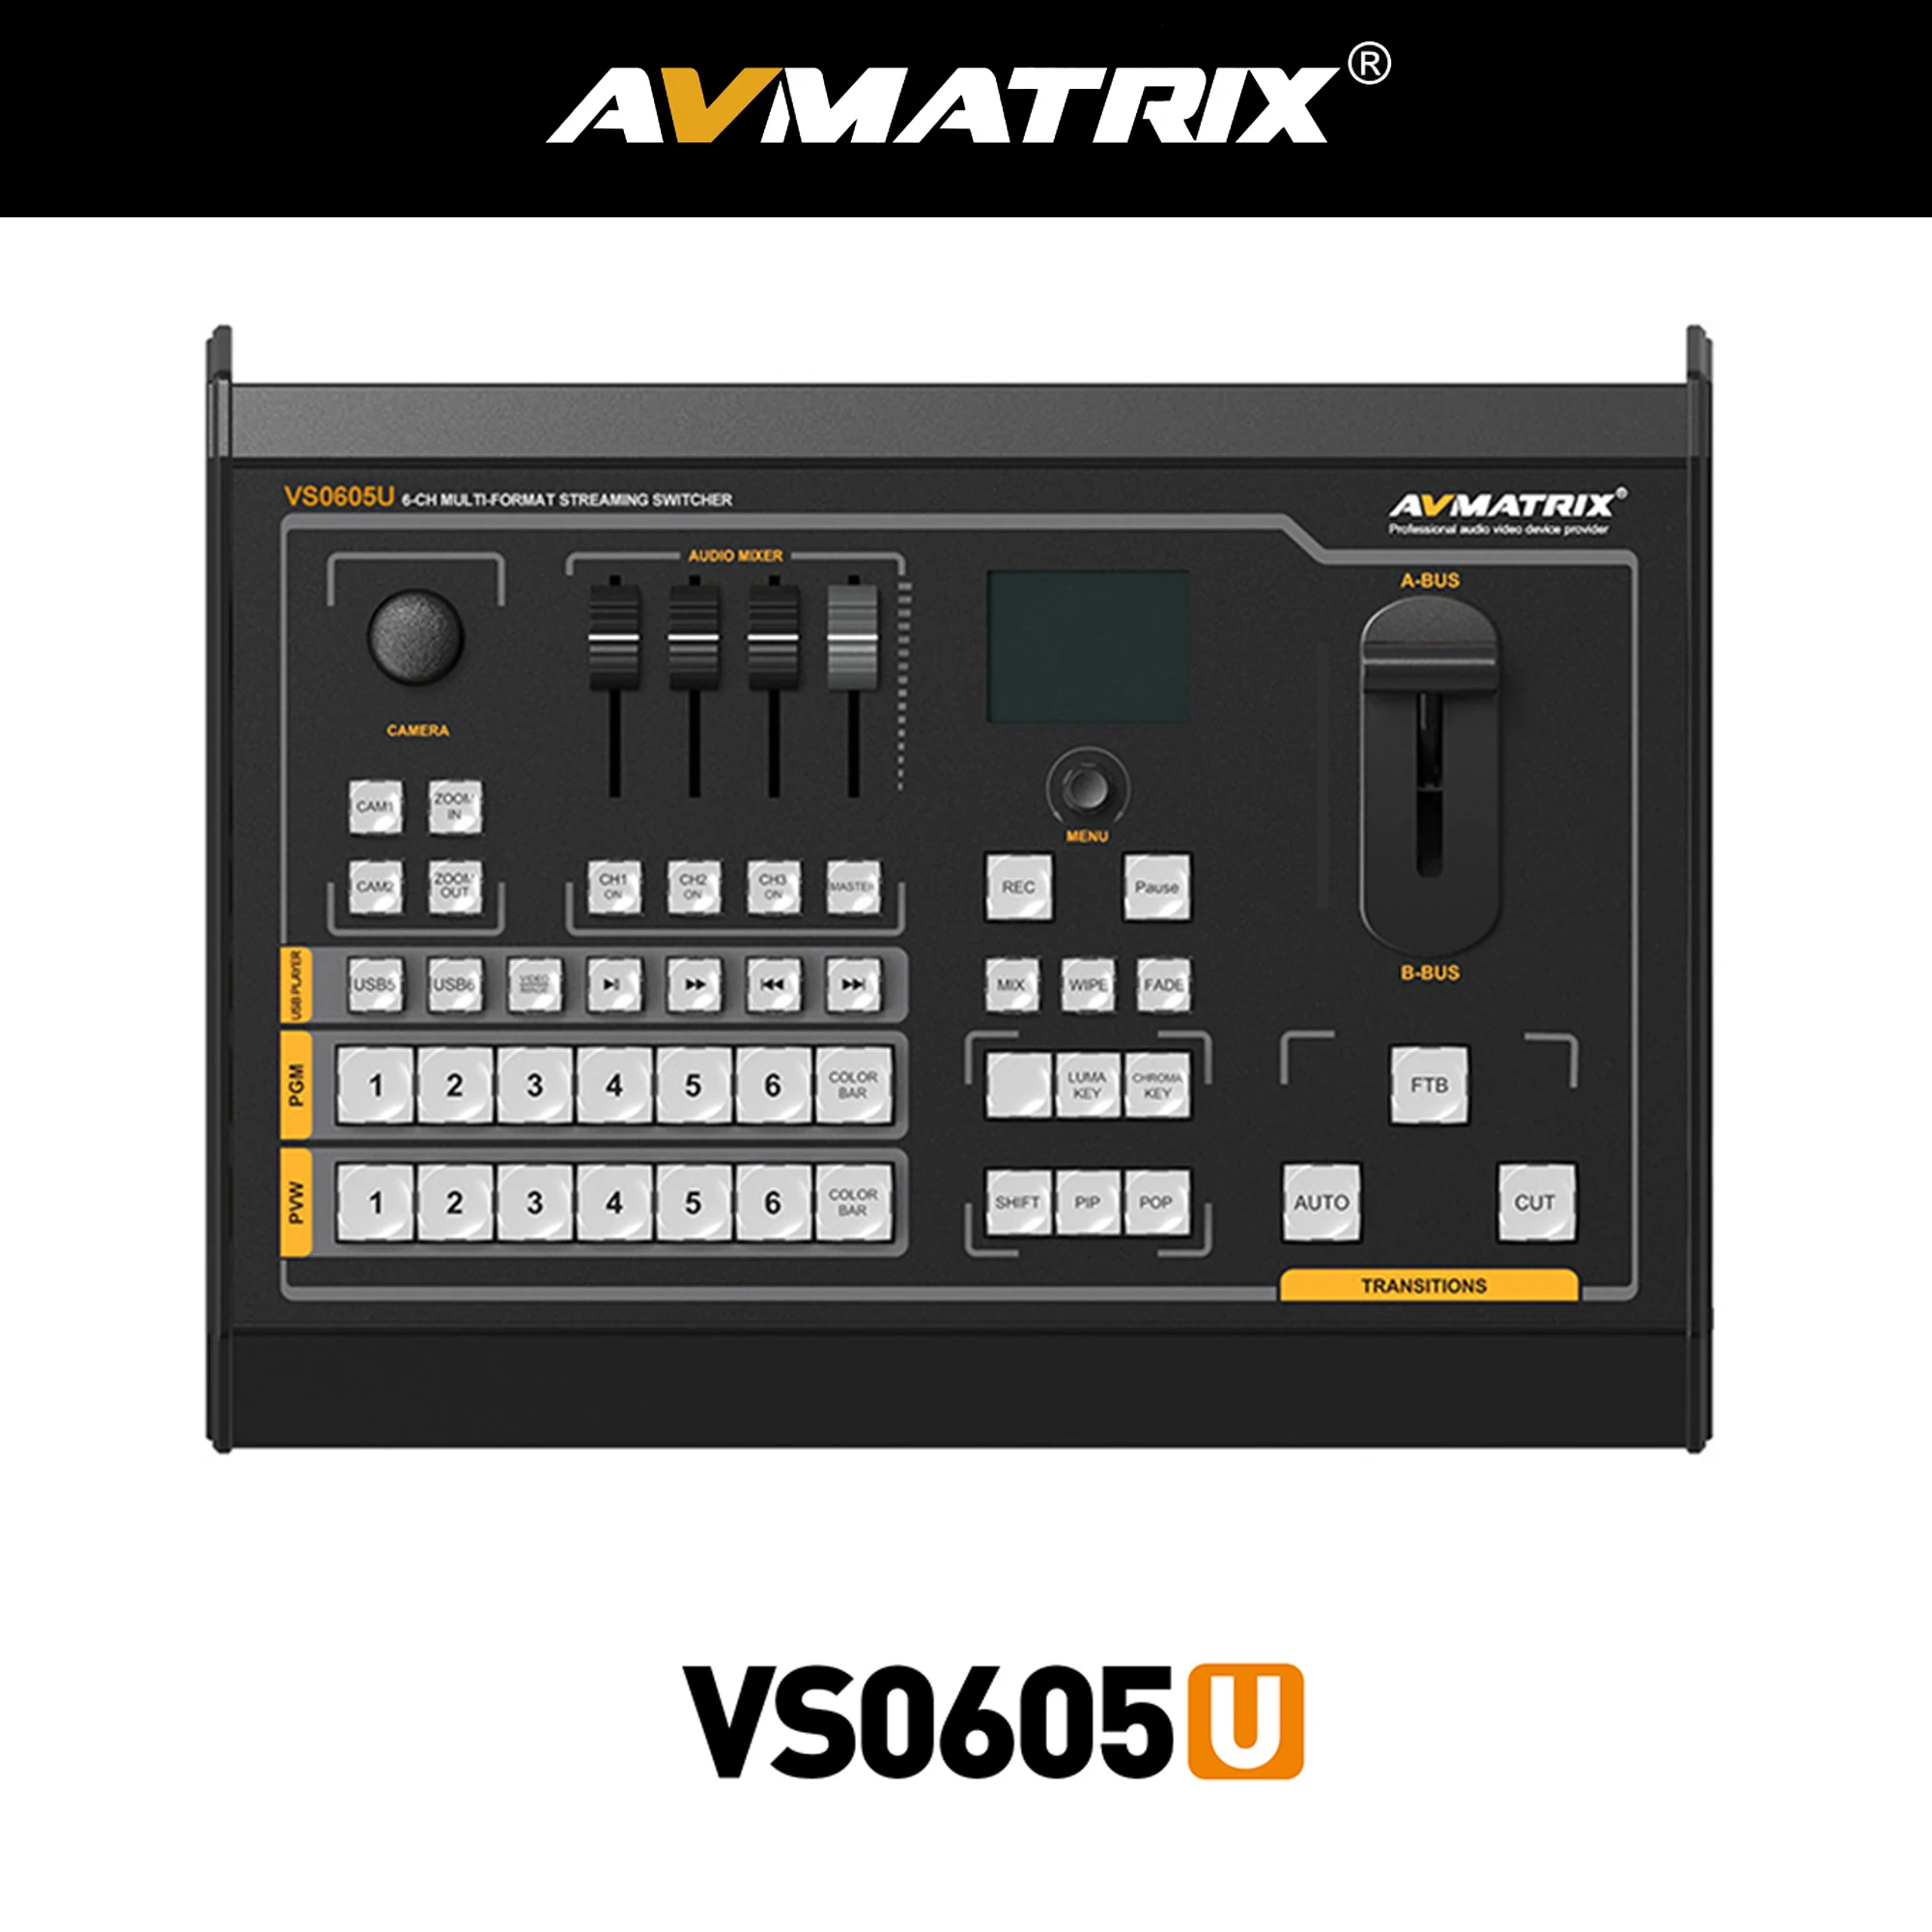 

Avmatrix VS0605U 6 CH Inputs Multi-Format Streaming Switcher With PiP&PoP mode, Audio Mixer Chroma/Luma Key, Record PGM